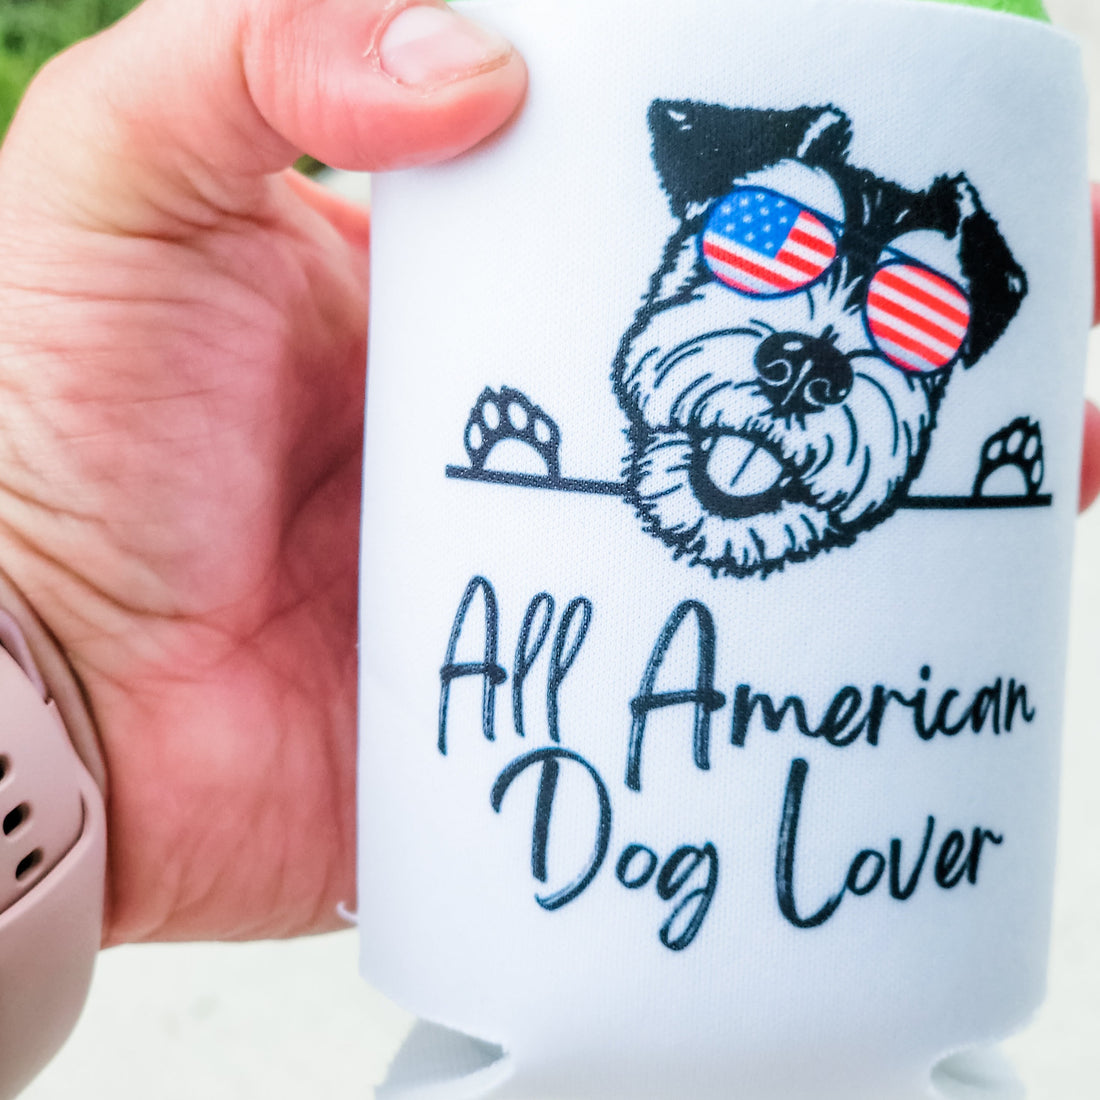 All American Dog Lover Koozie